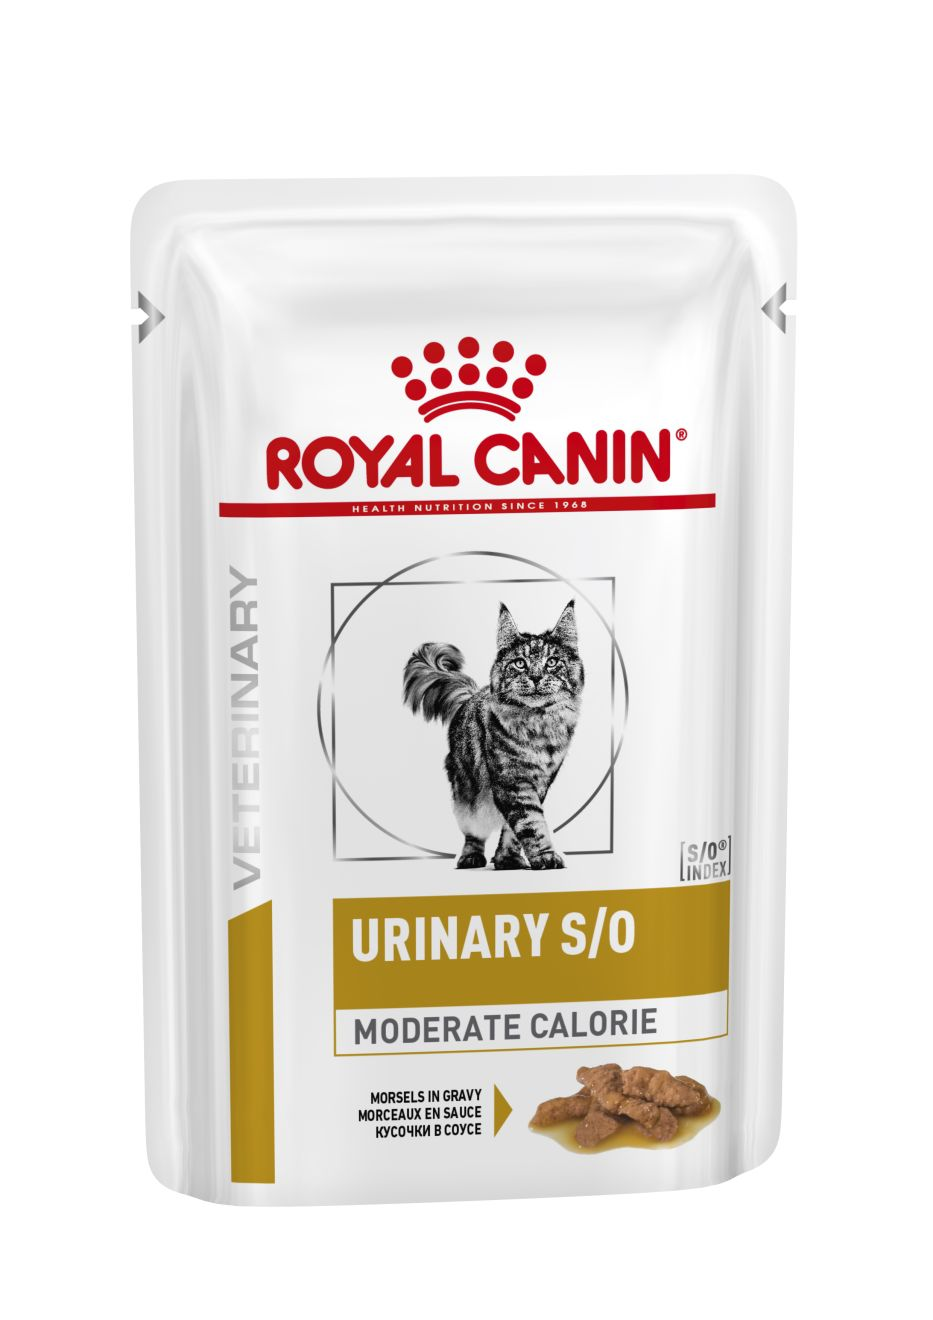 URINARY S/O MODERATE CALORIE Häppchen in Soße für Katzen